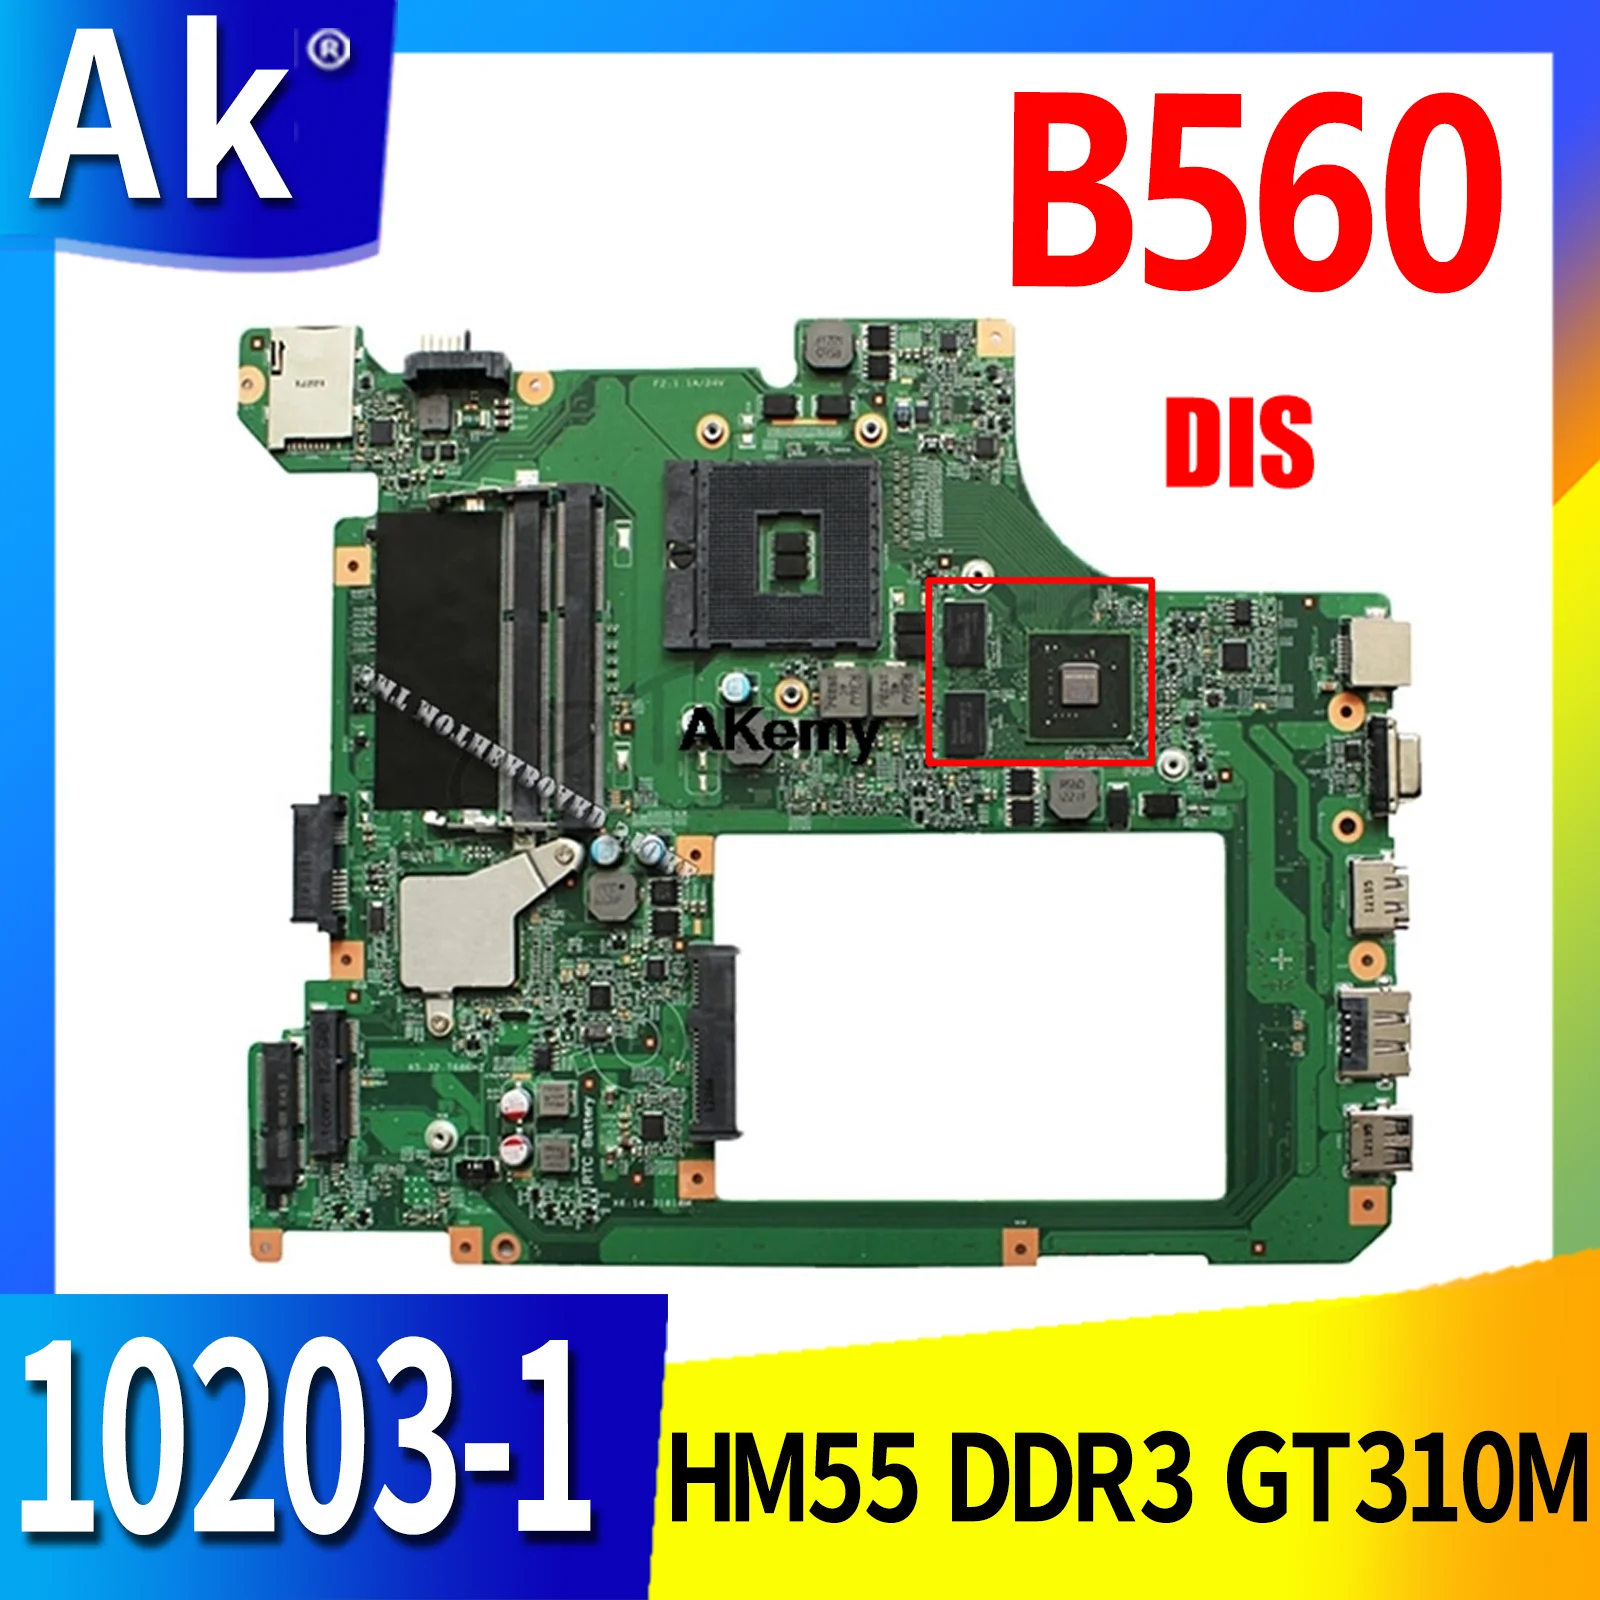 

Akemy 10203-1 LA56 MB 48.4JW06.011 Mainboard For Lenovo IdeaPad B560 Laptop Motherboard HM55 DDR3 GT310M Graphics